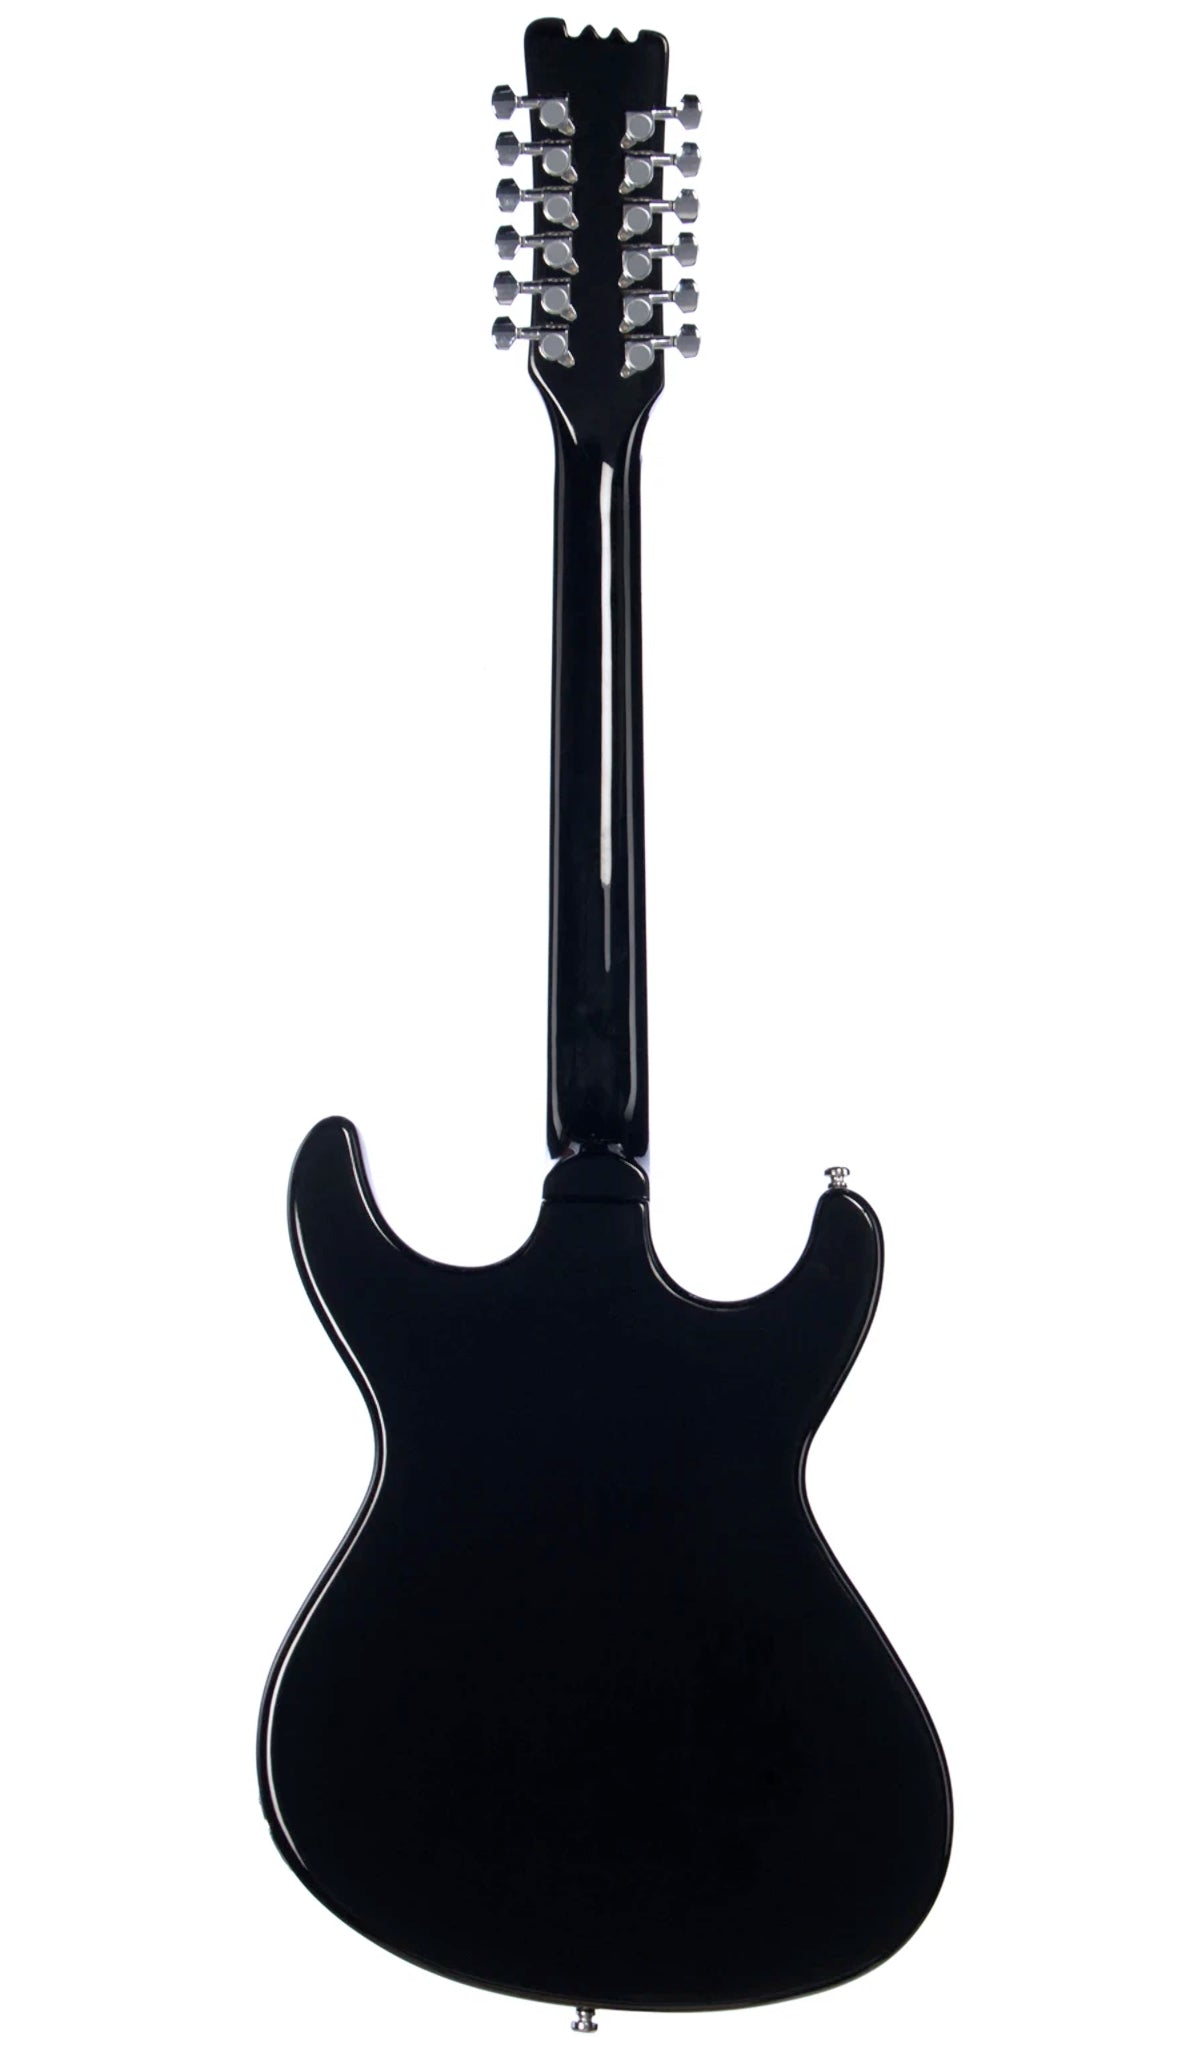 Eastwood Guitars Sidejack 12 DLX Black and Chrome #color_black-and-chrome